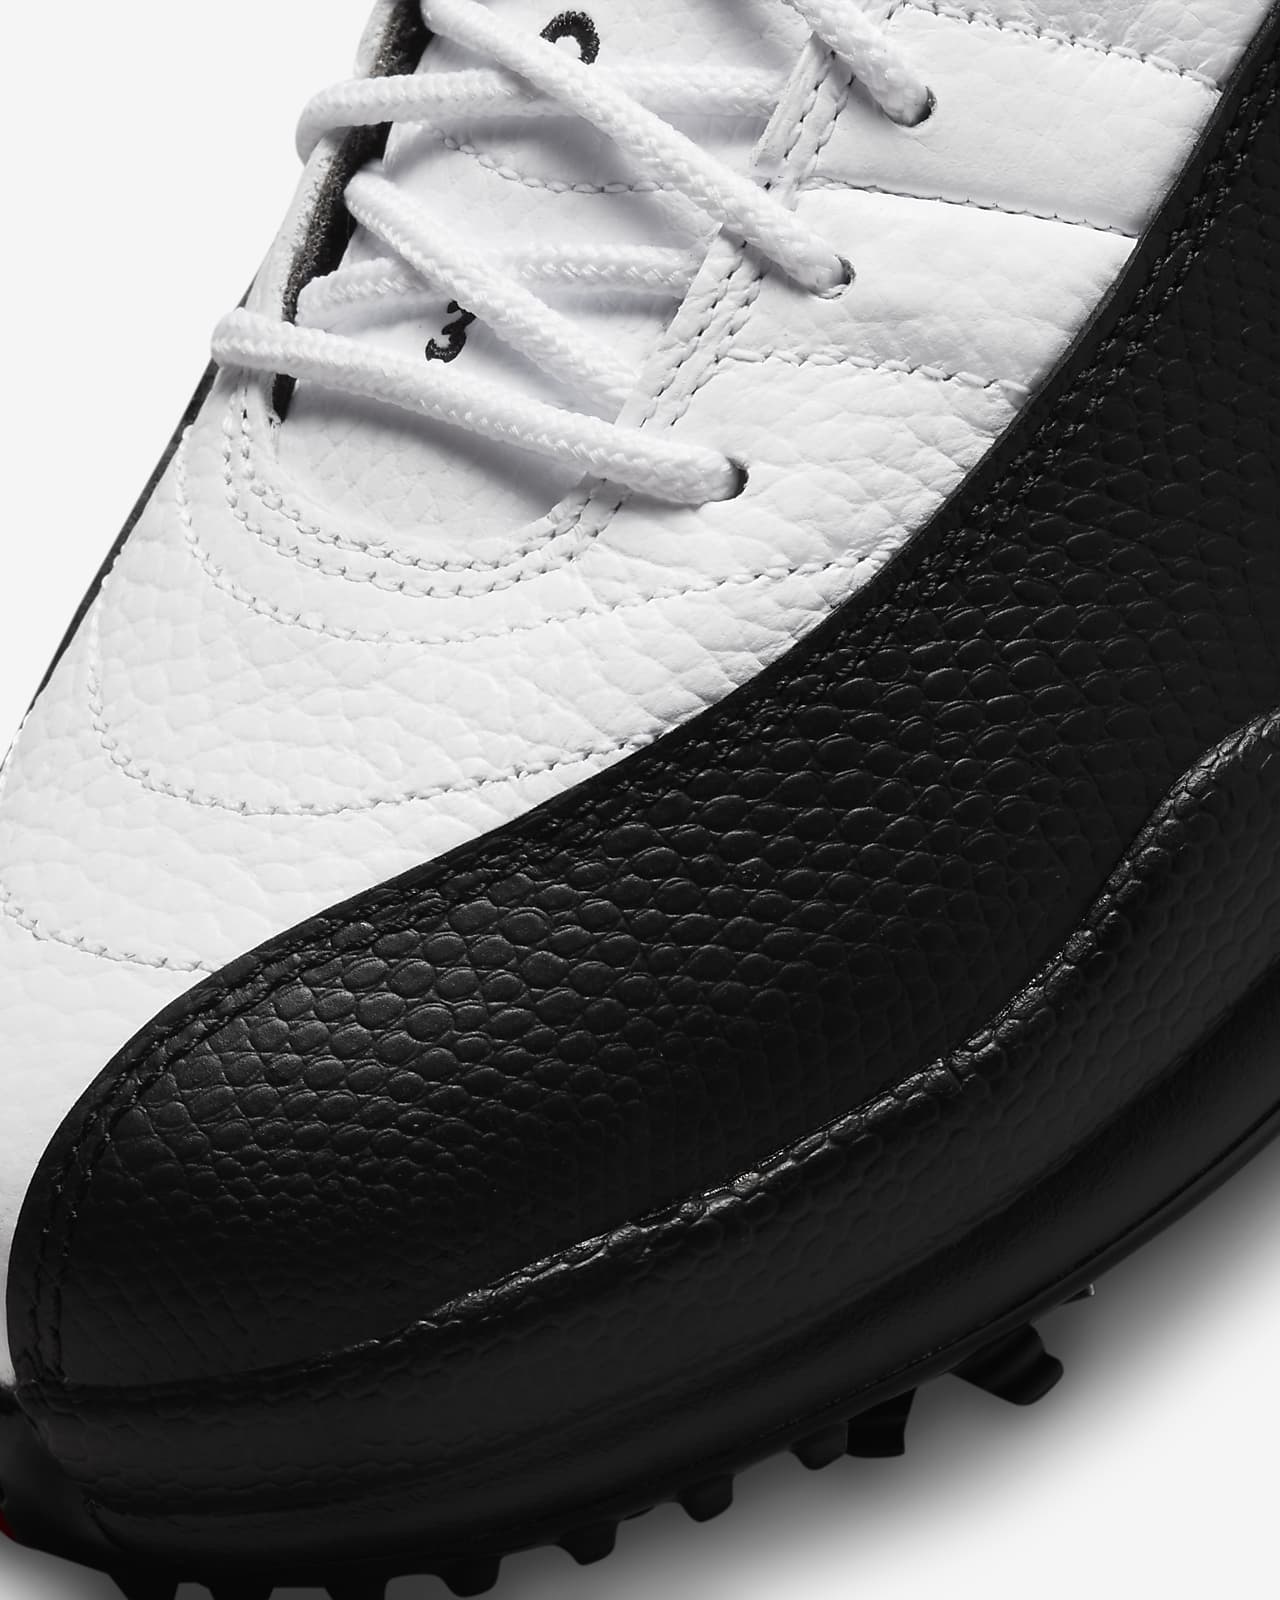 Air Jordan XII Low Golf Shoes. Nike LU